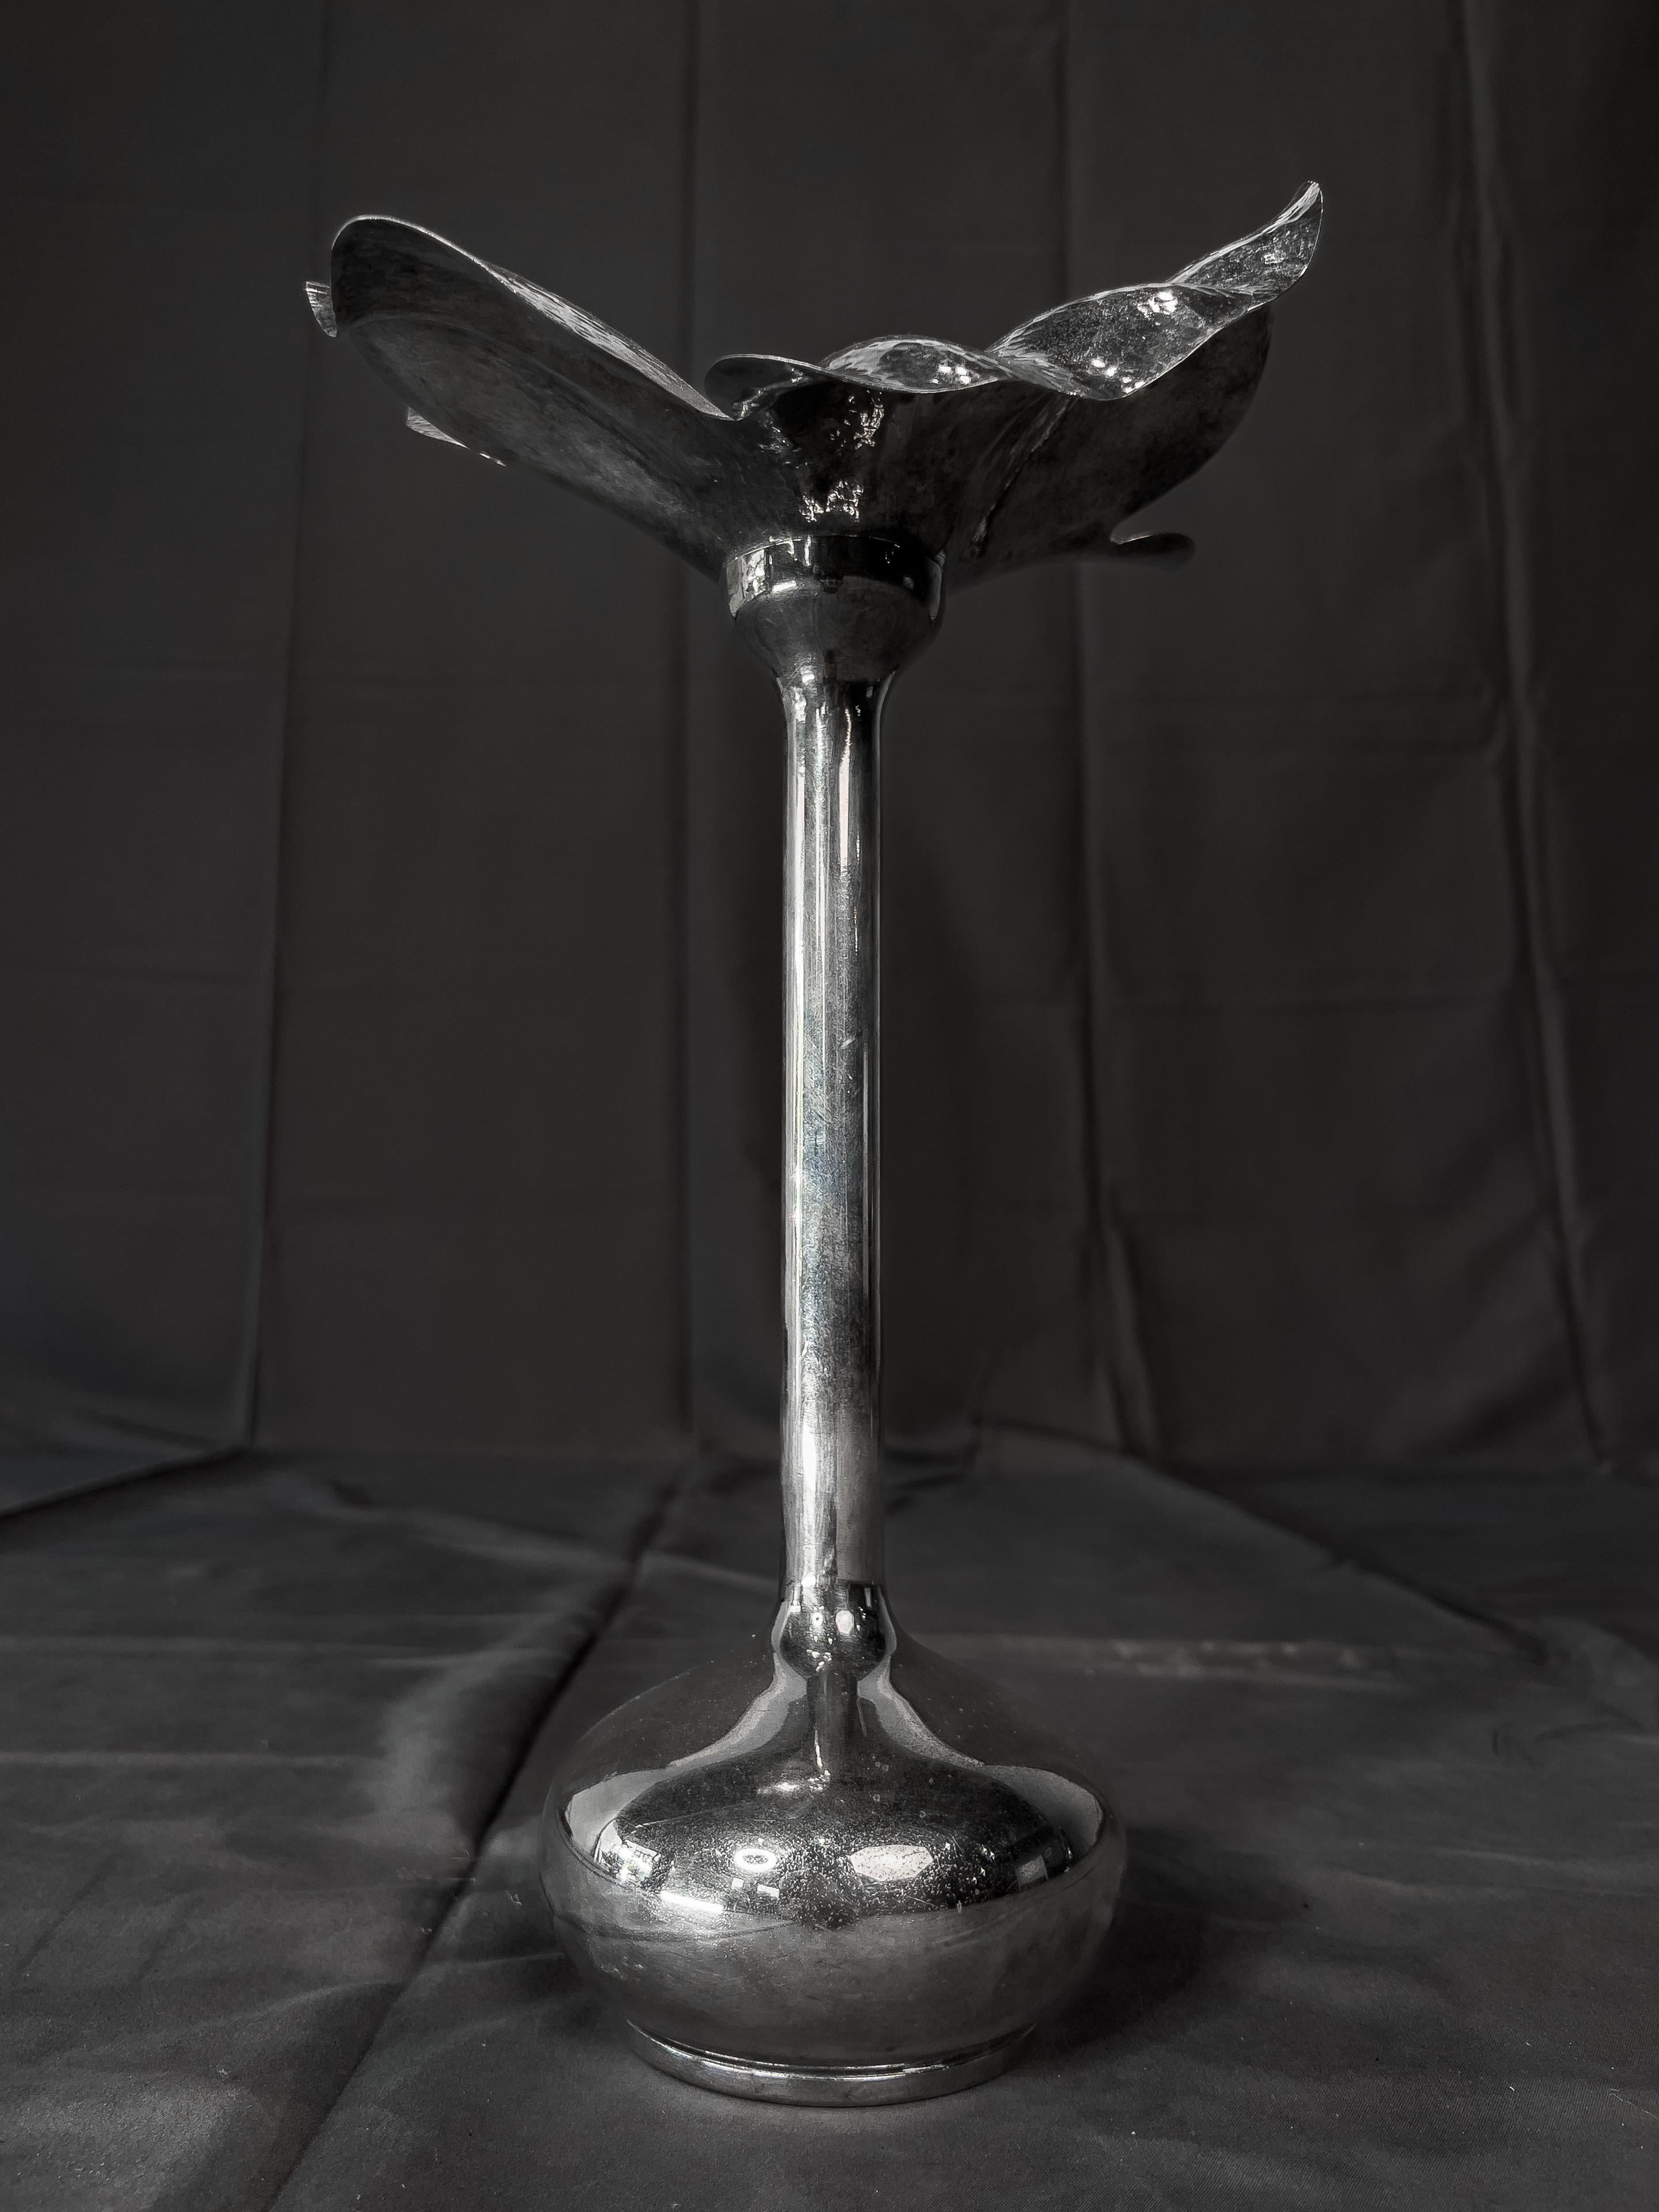 Brass Handmade Hammered Silverplate Vase signed by Brazilian artist M M EVOLUCAO 